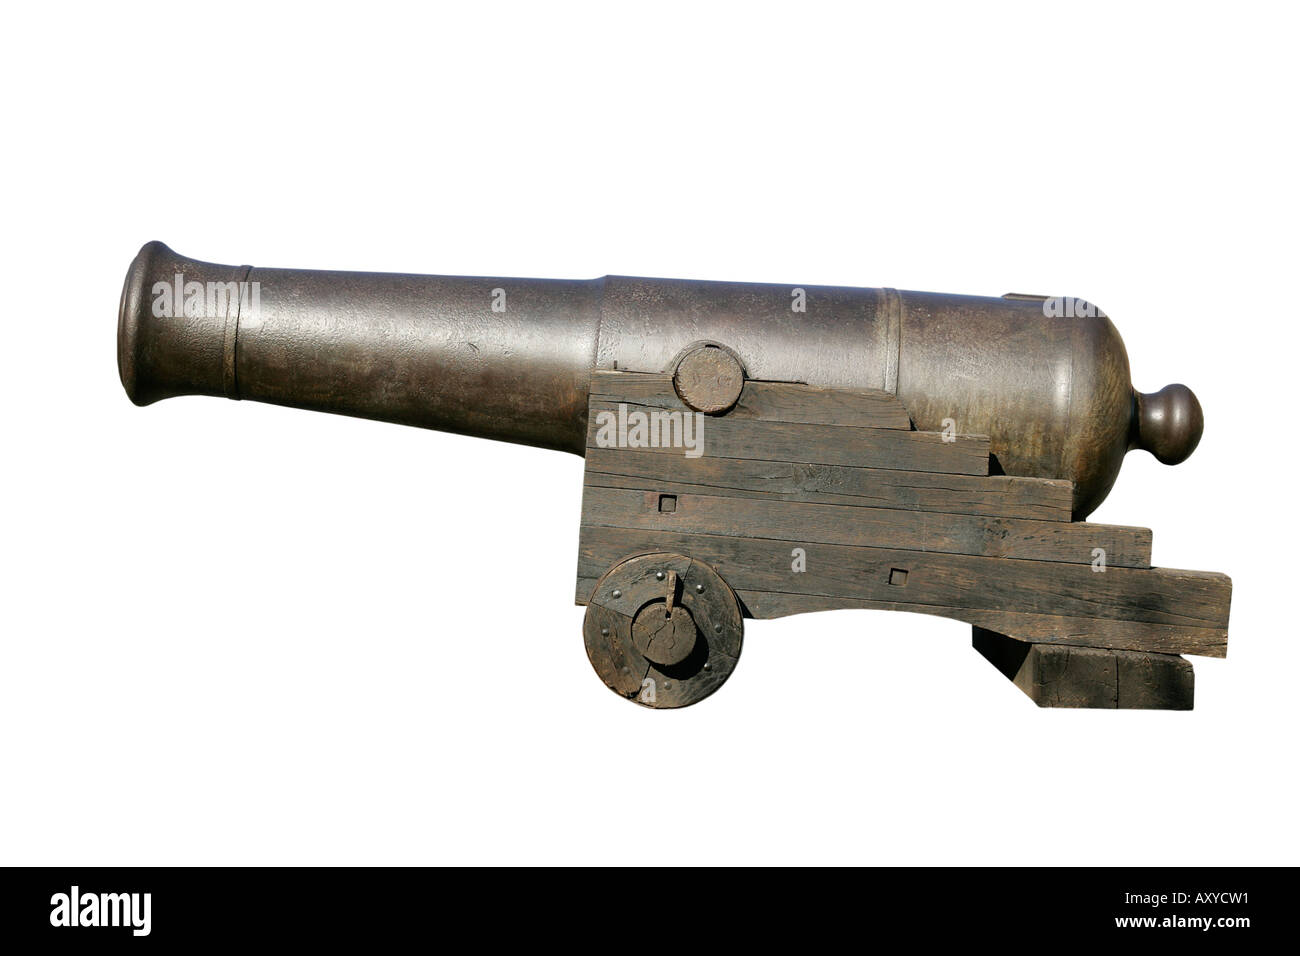 Brass gun hi-res stock photography and images - Alamy